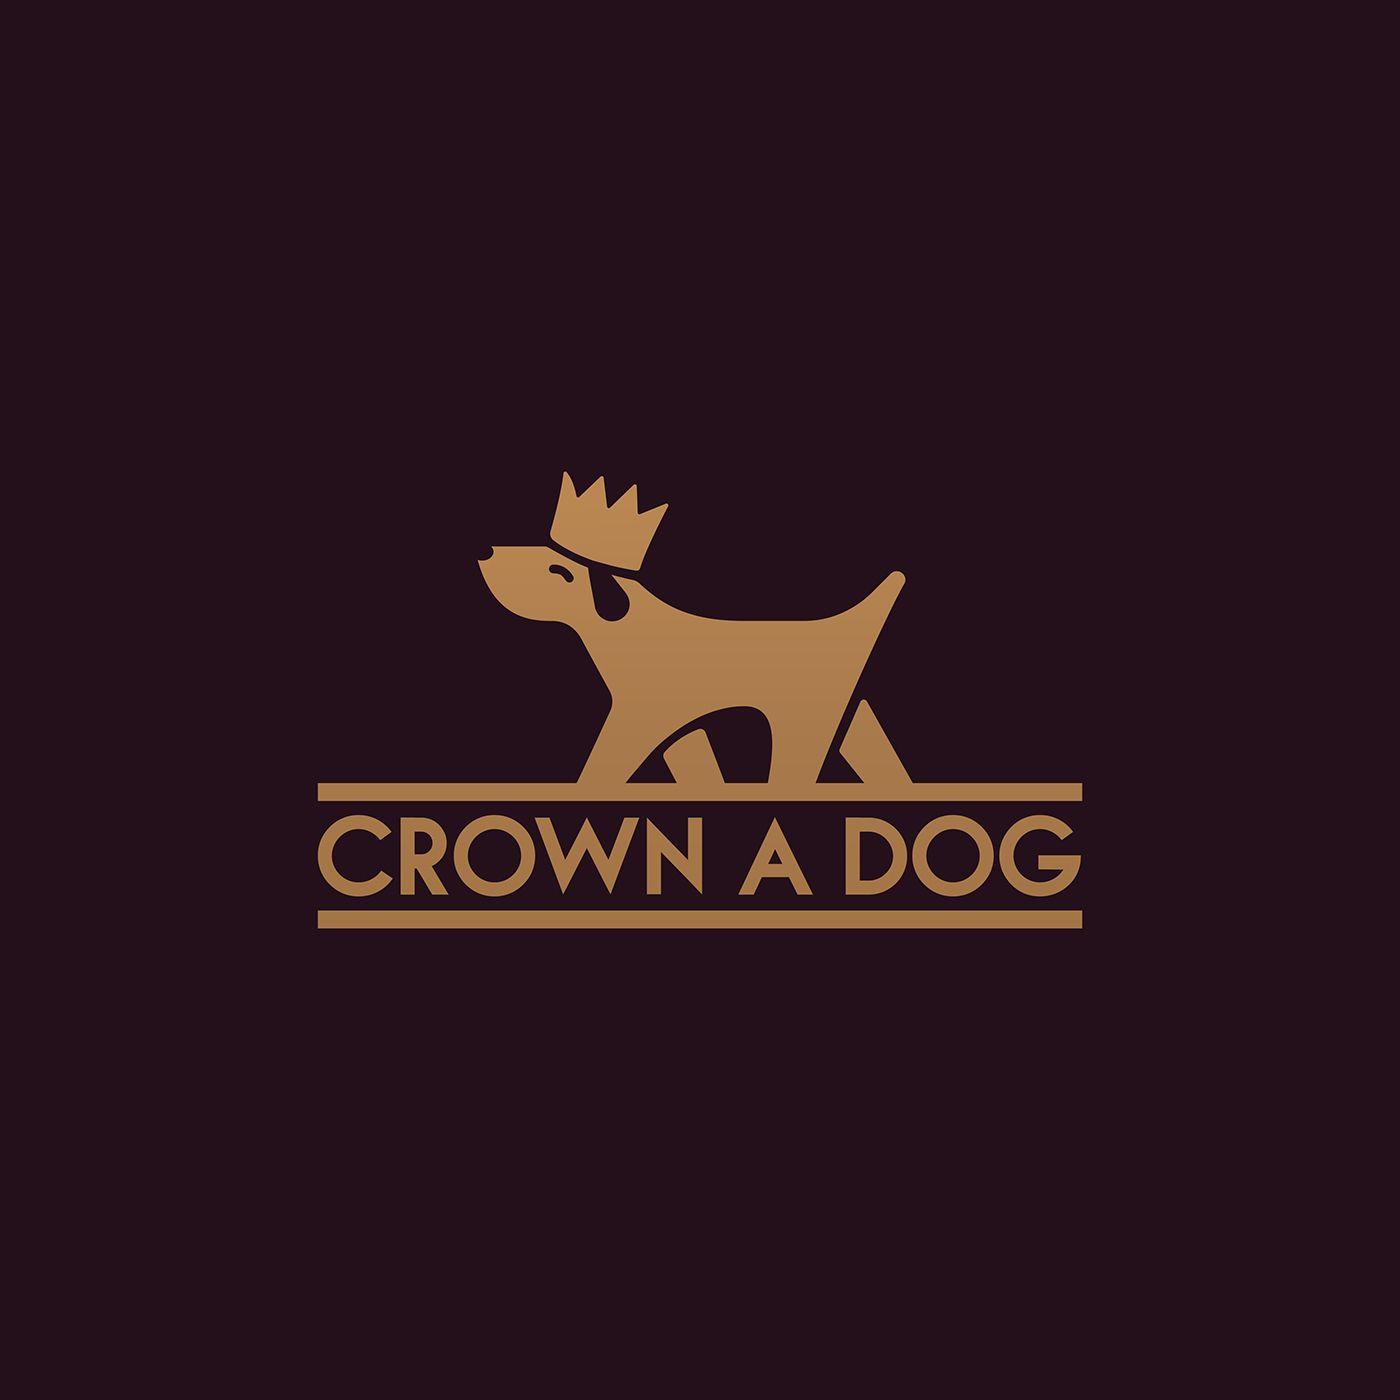 Maroon Dog Logo - Crown a Dog logo design on Behance